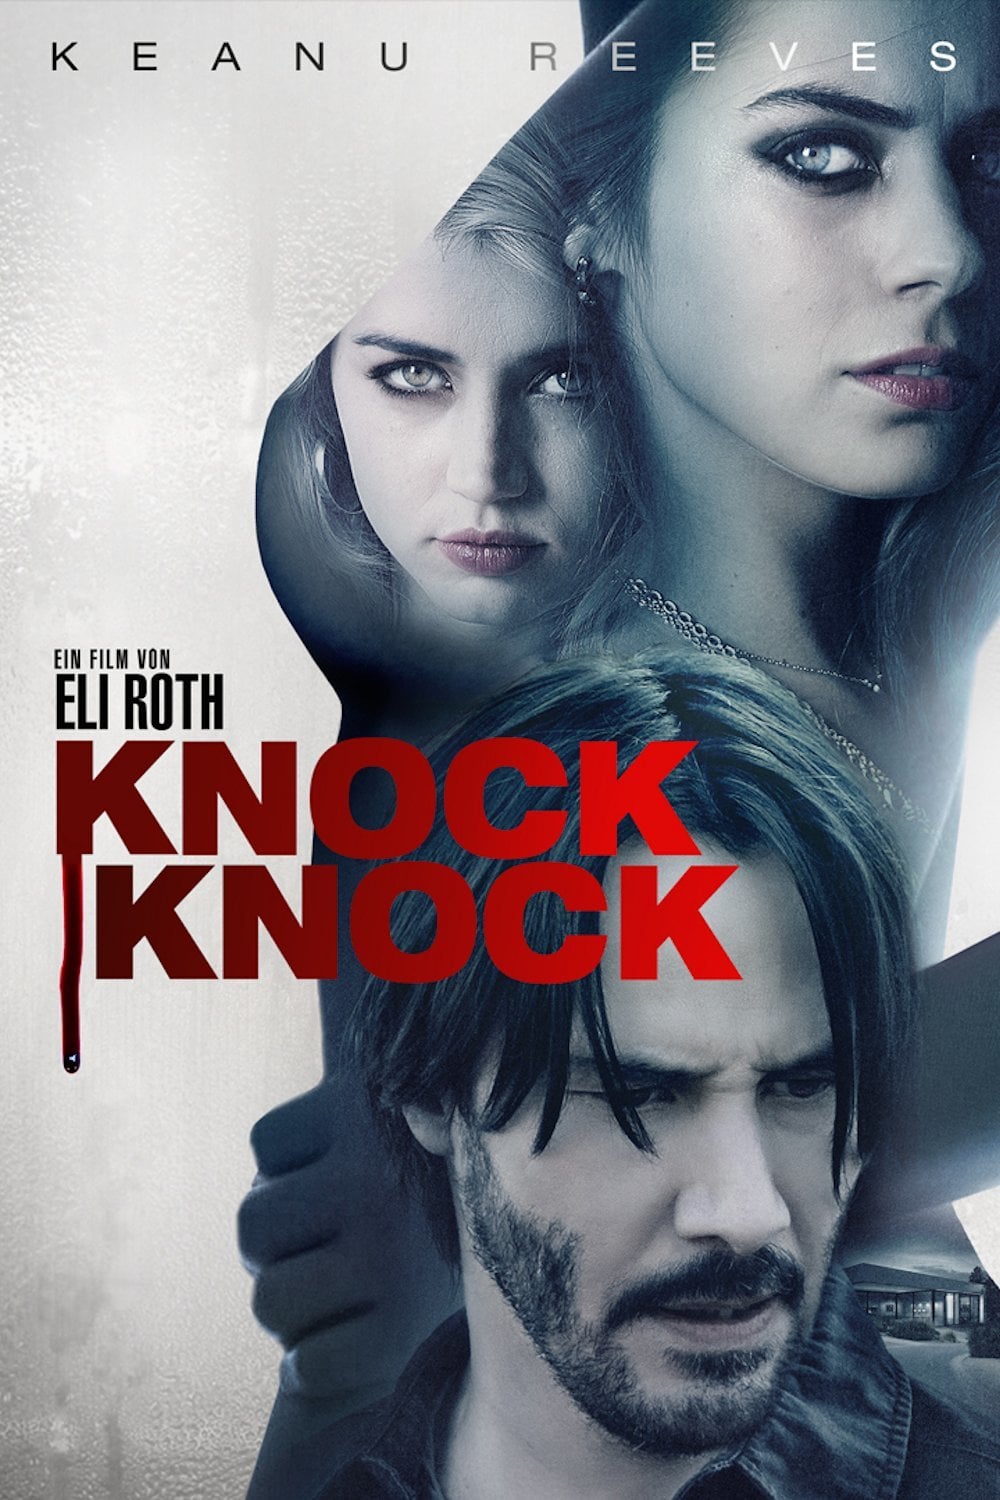 Plakat von "Knock Knock"